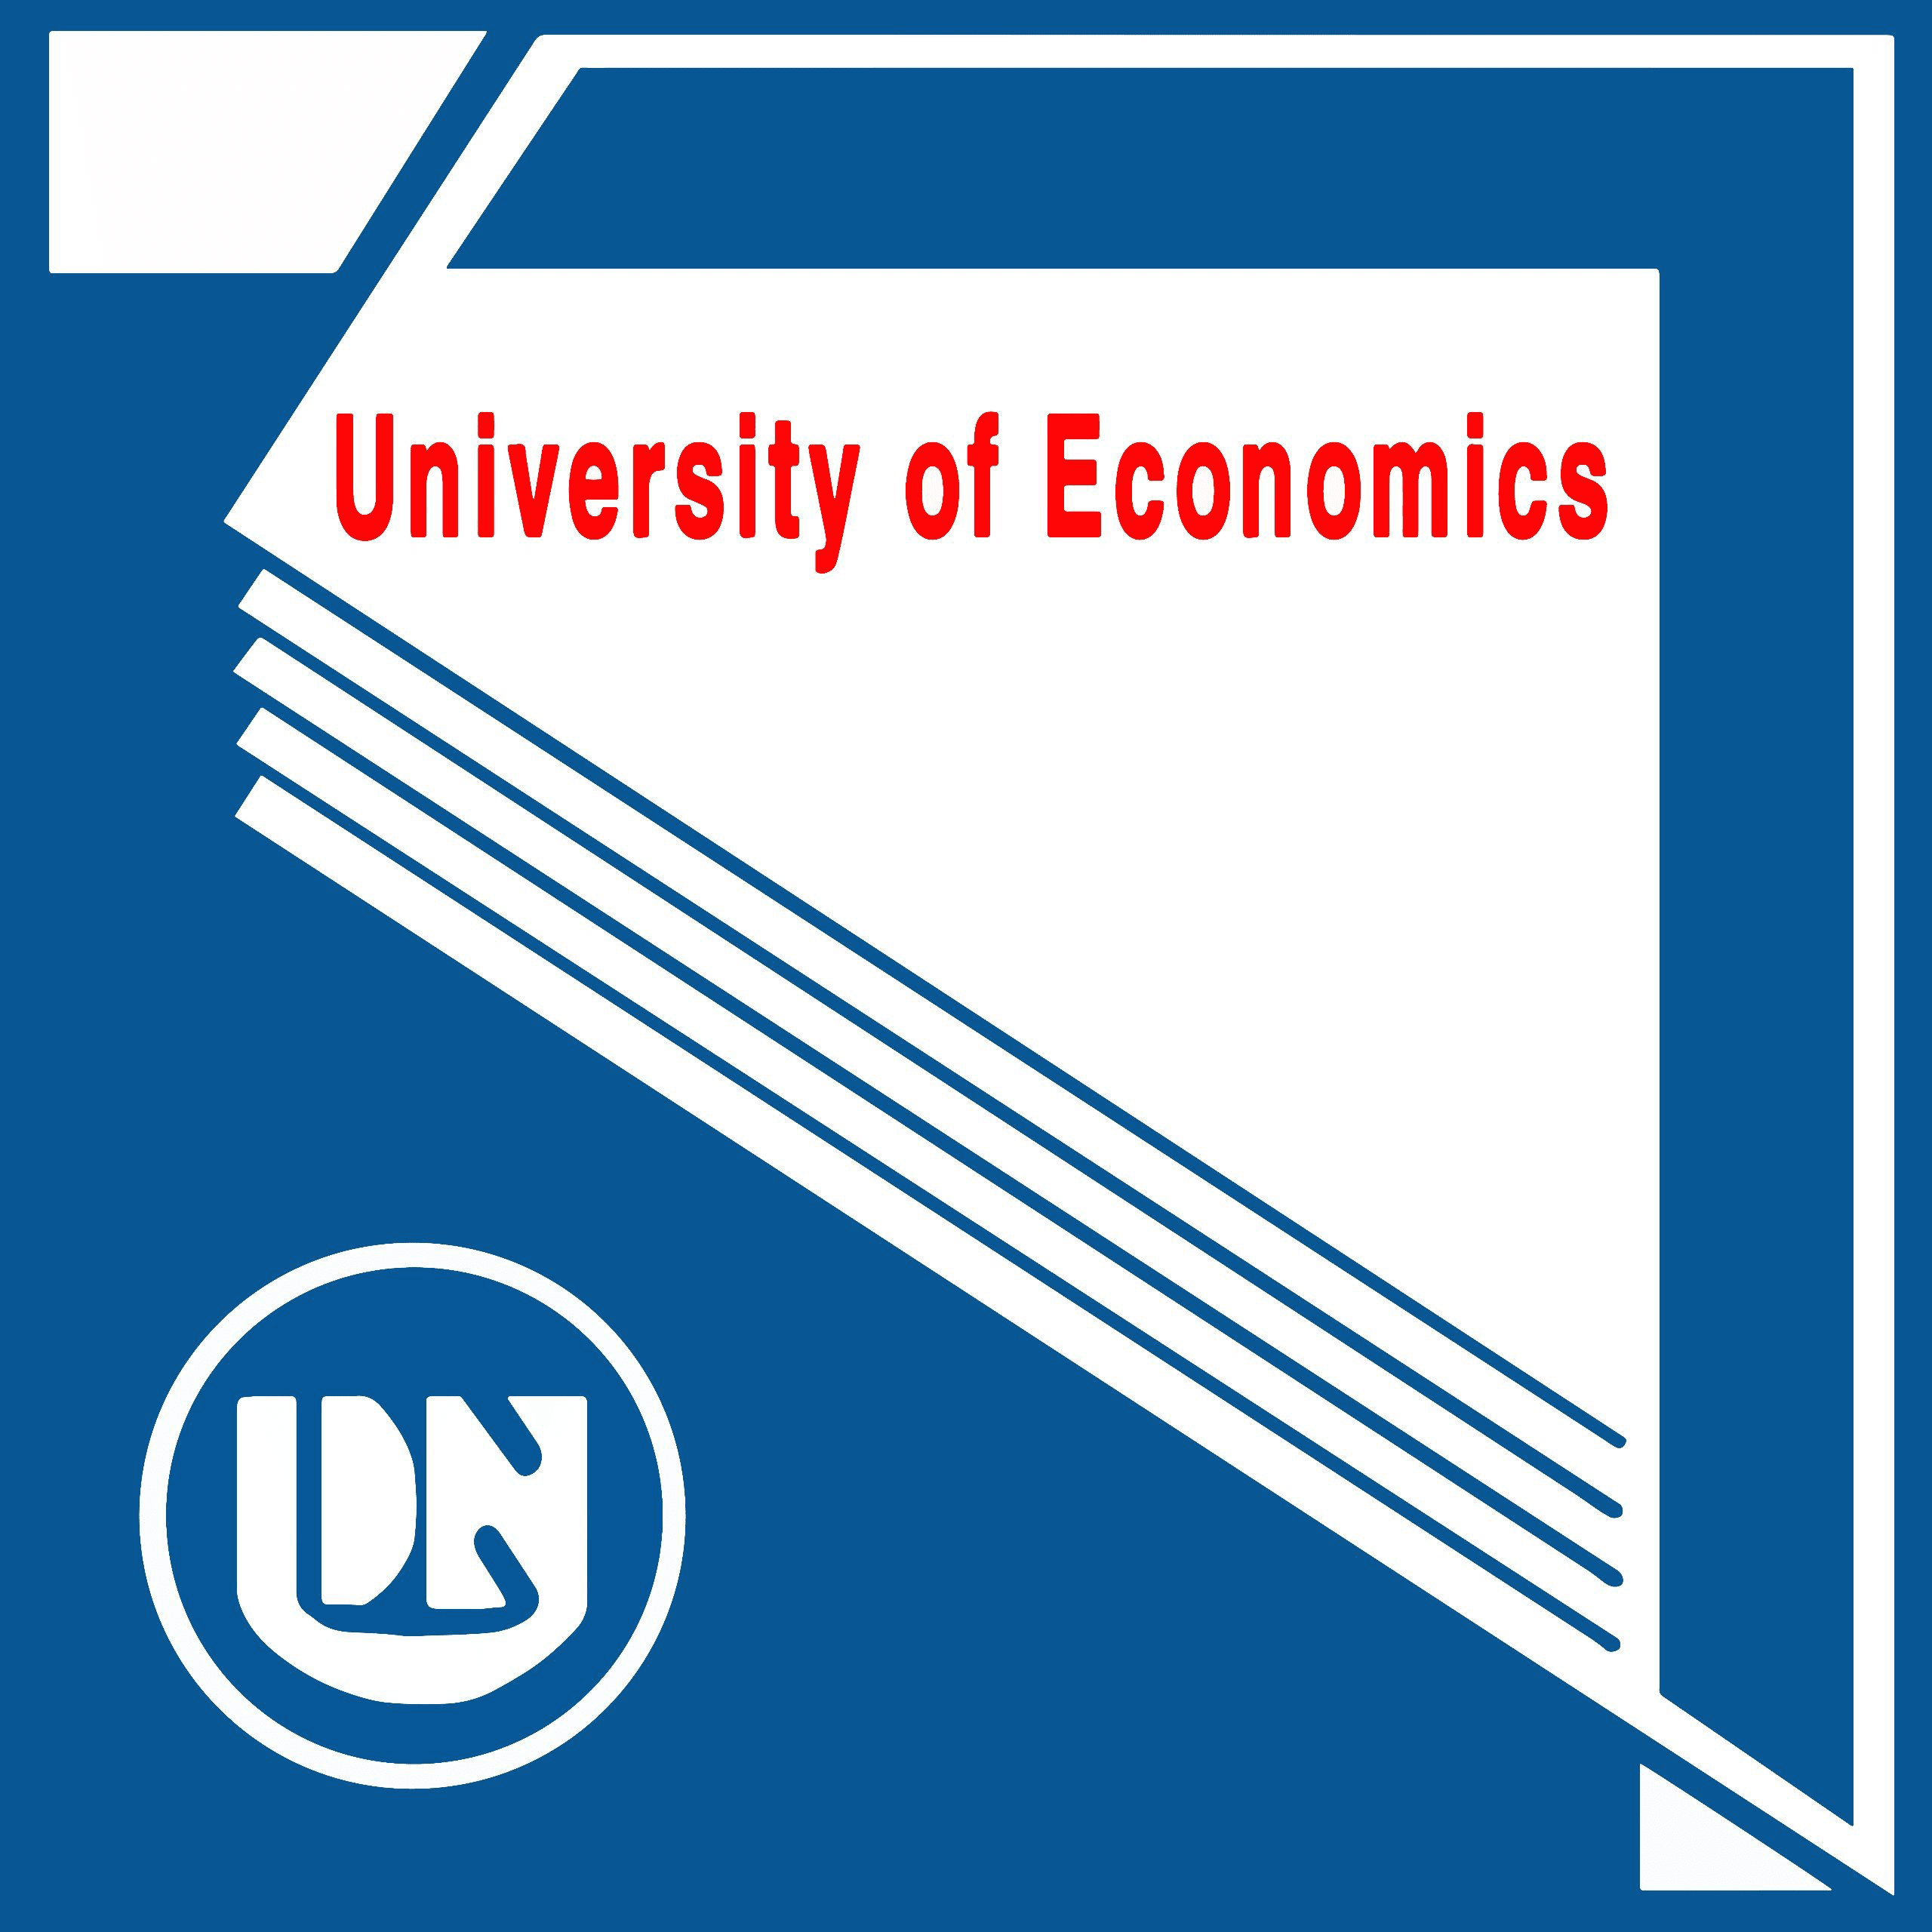 The University of Da Nang - University of Economics